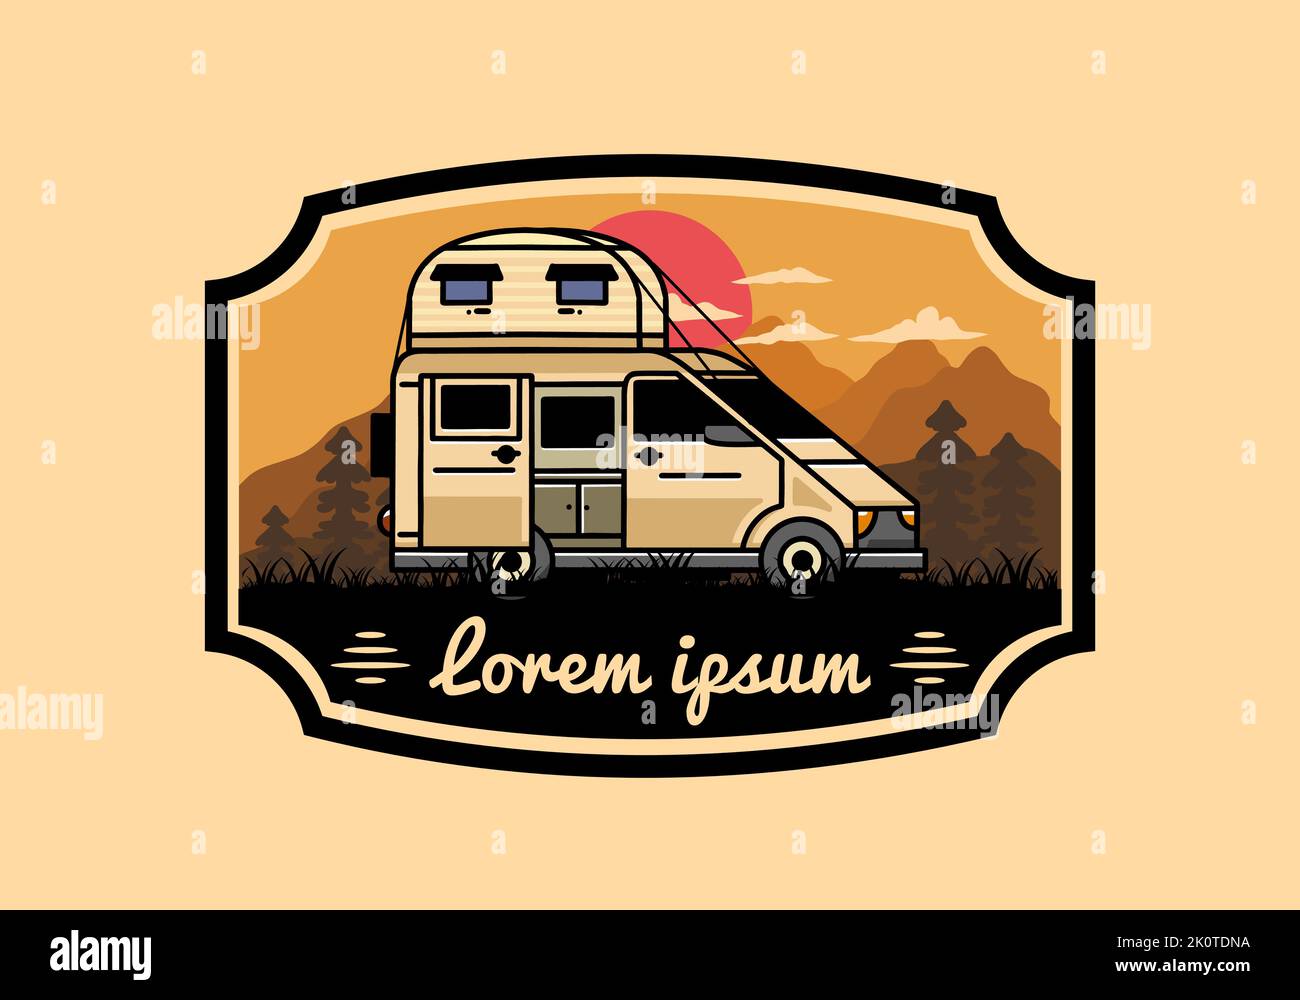 Big van camper with roof box tent illustration badge design Stock ...